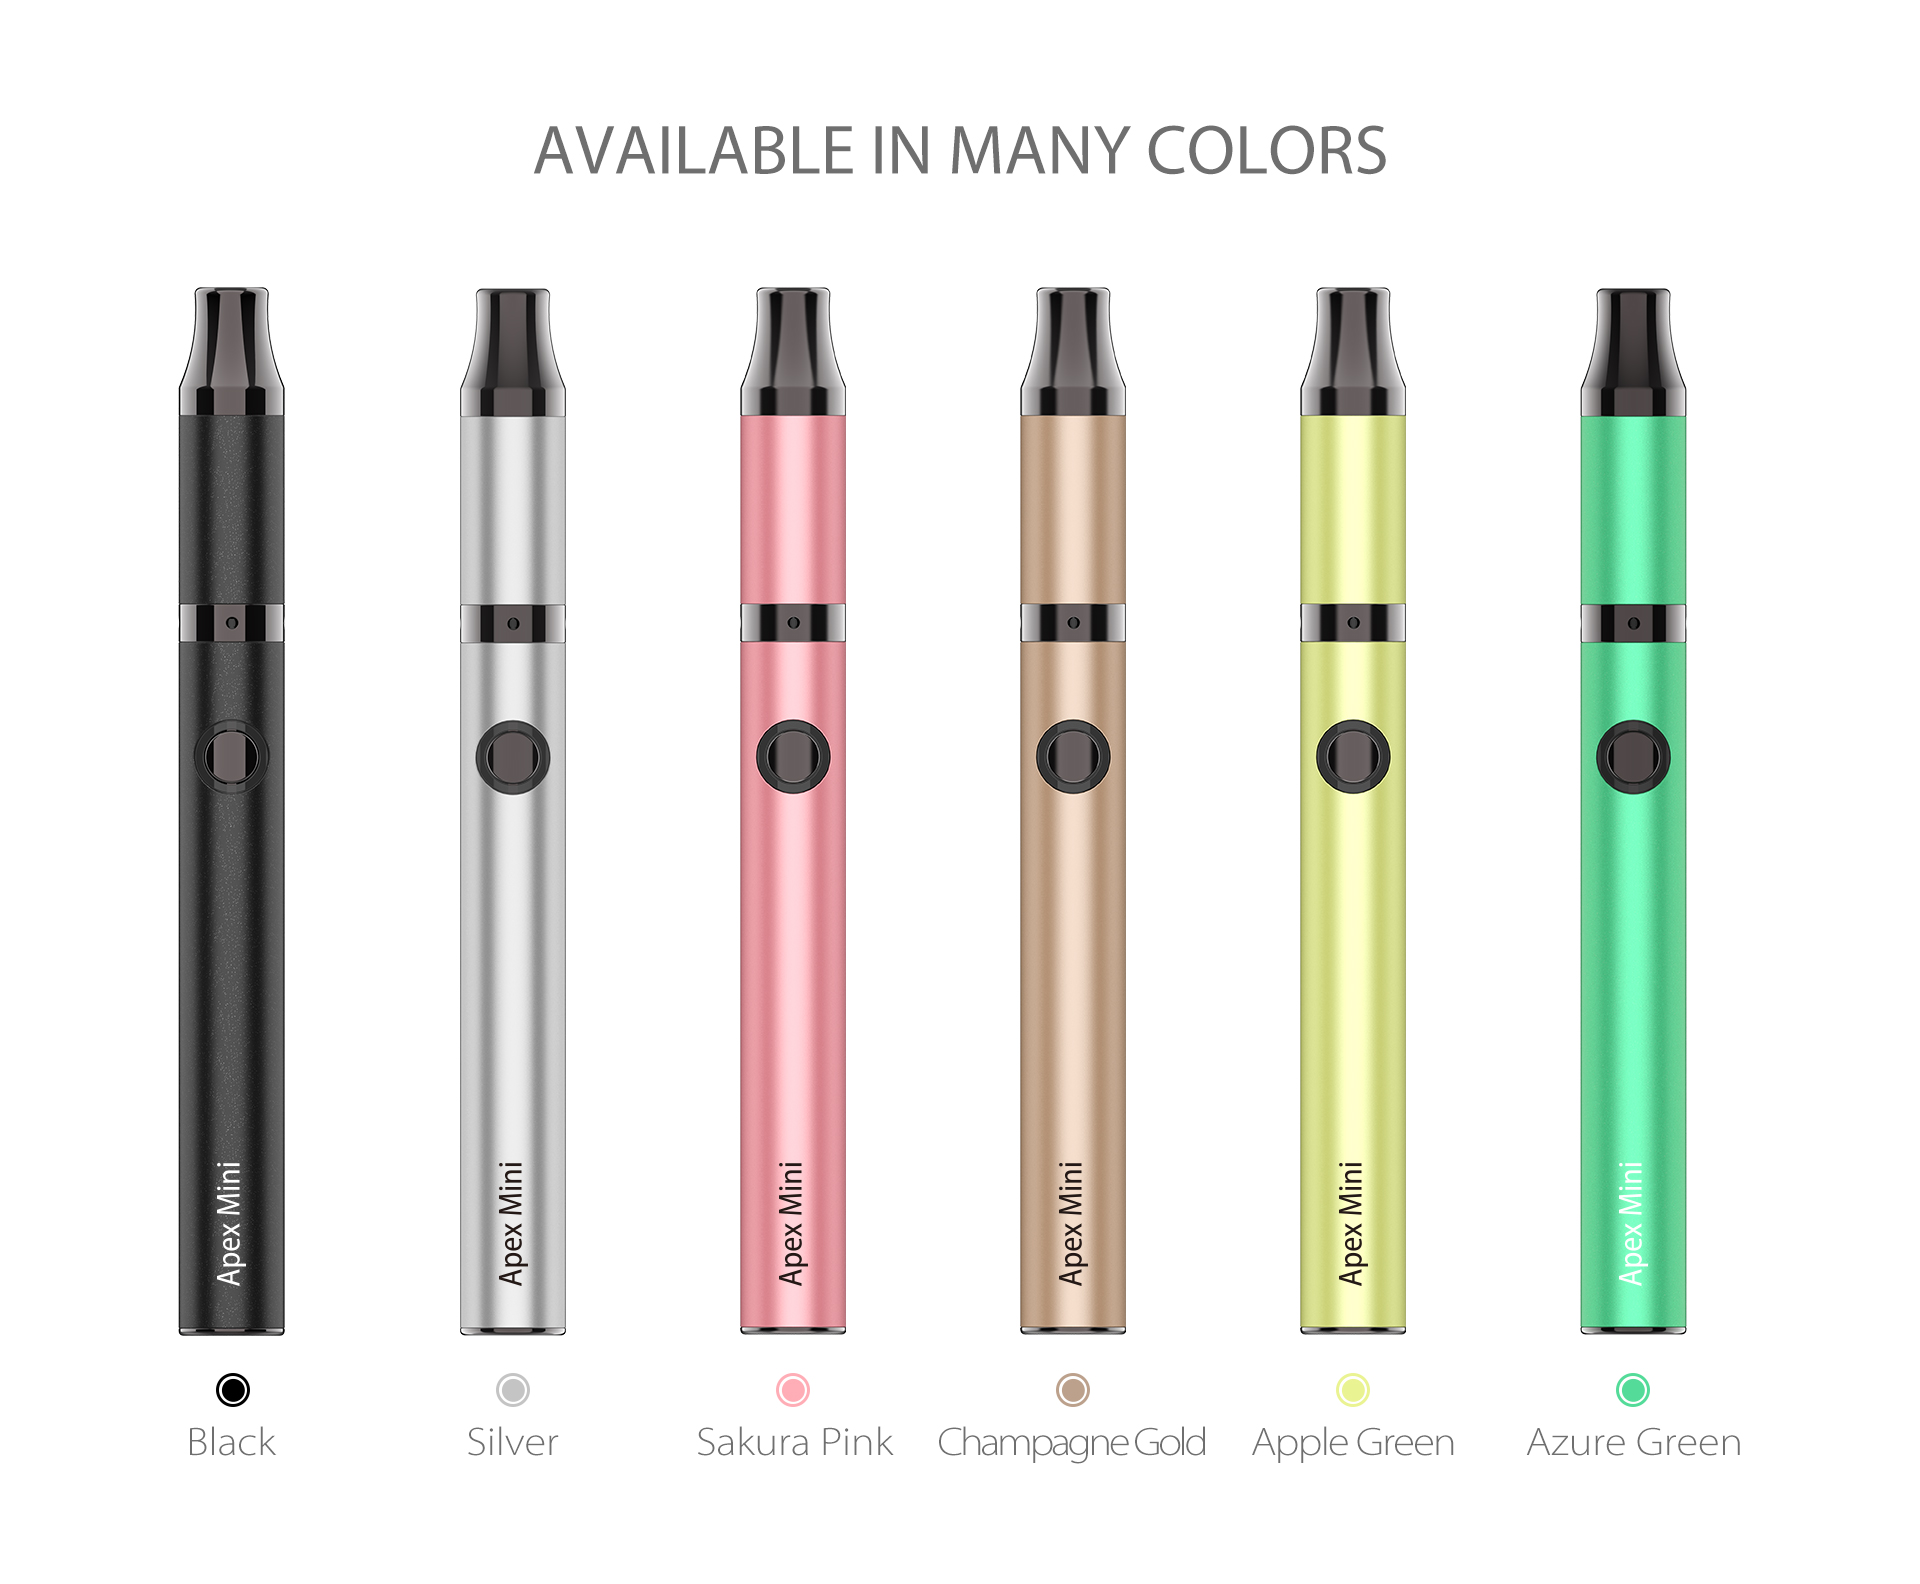 Yocan Apex Mini vape pen comes with 6 stylish colors.